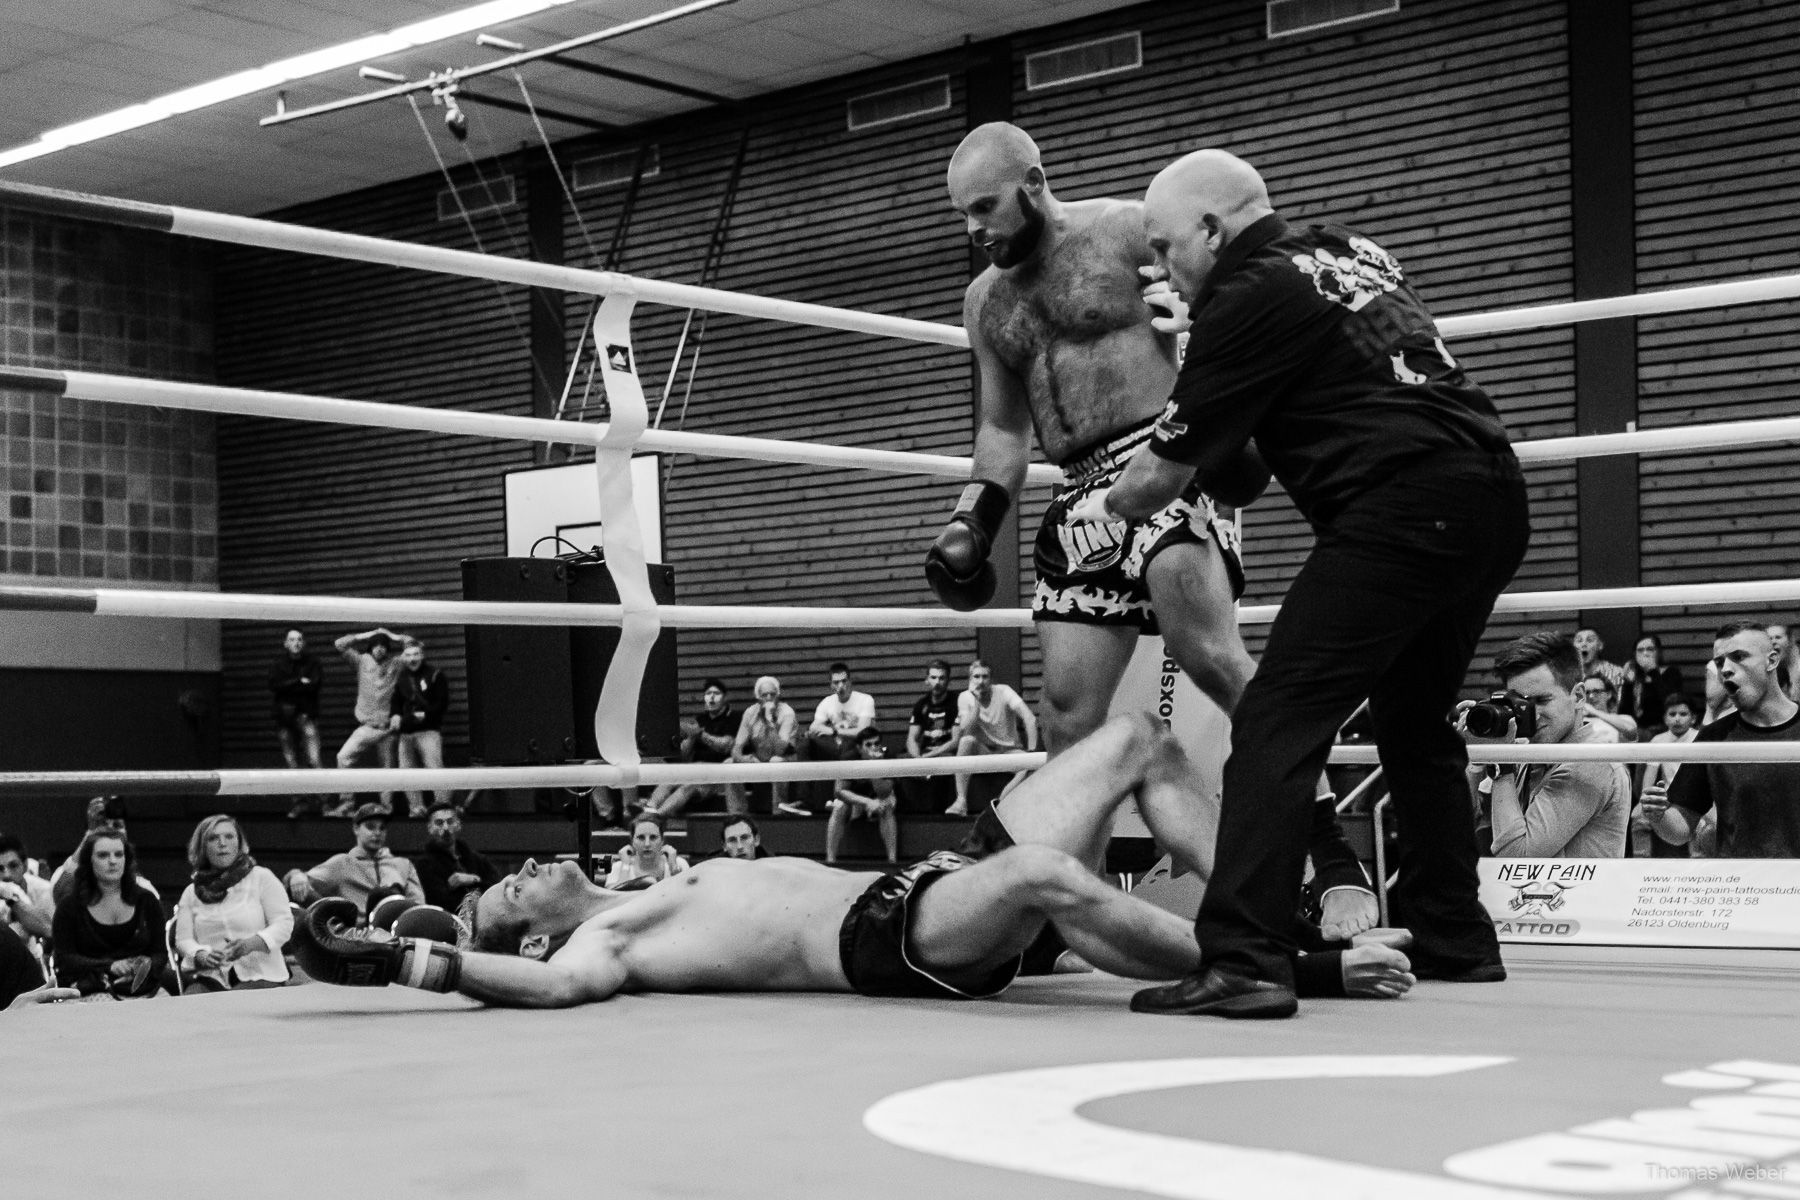 3. Oldenburger Fightnight von Nikita Pankraz, Fotograf Thomas Weber